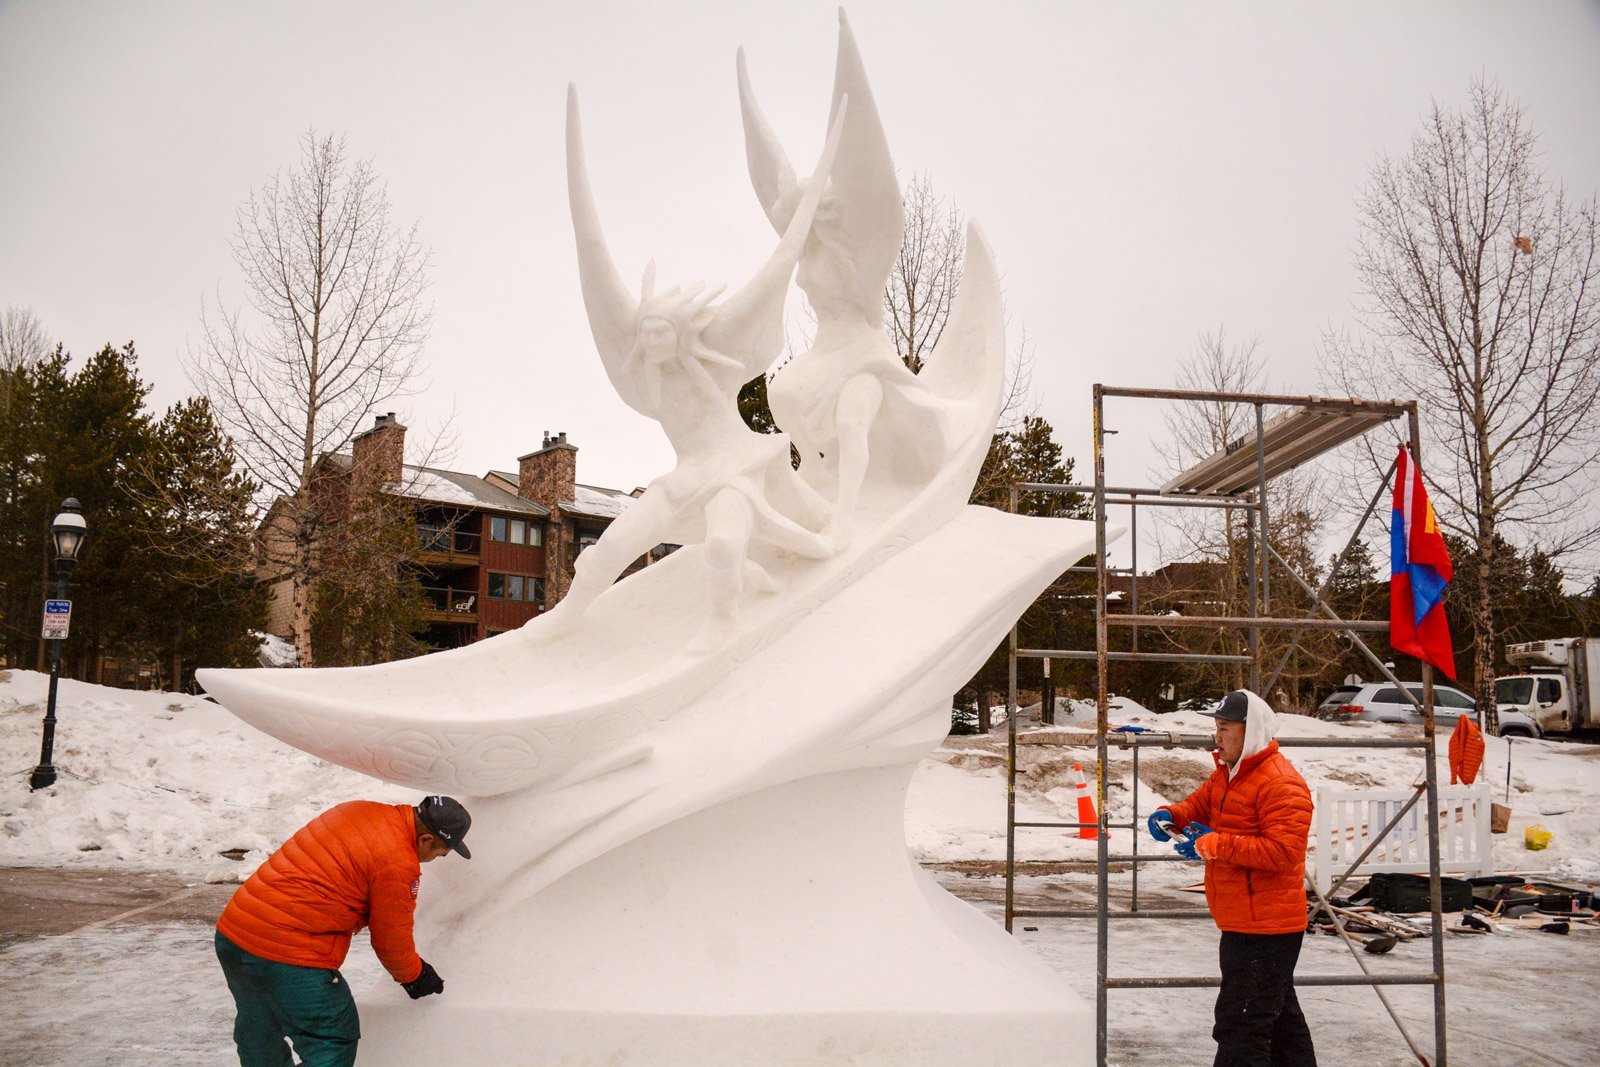 Breckenridge International Snow Sculpture Championships - last year's winner - Mongolia